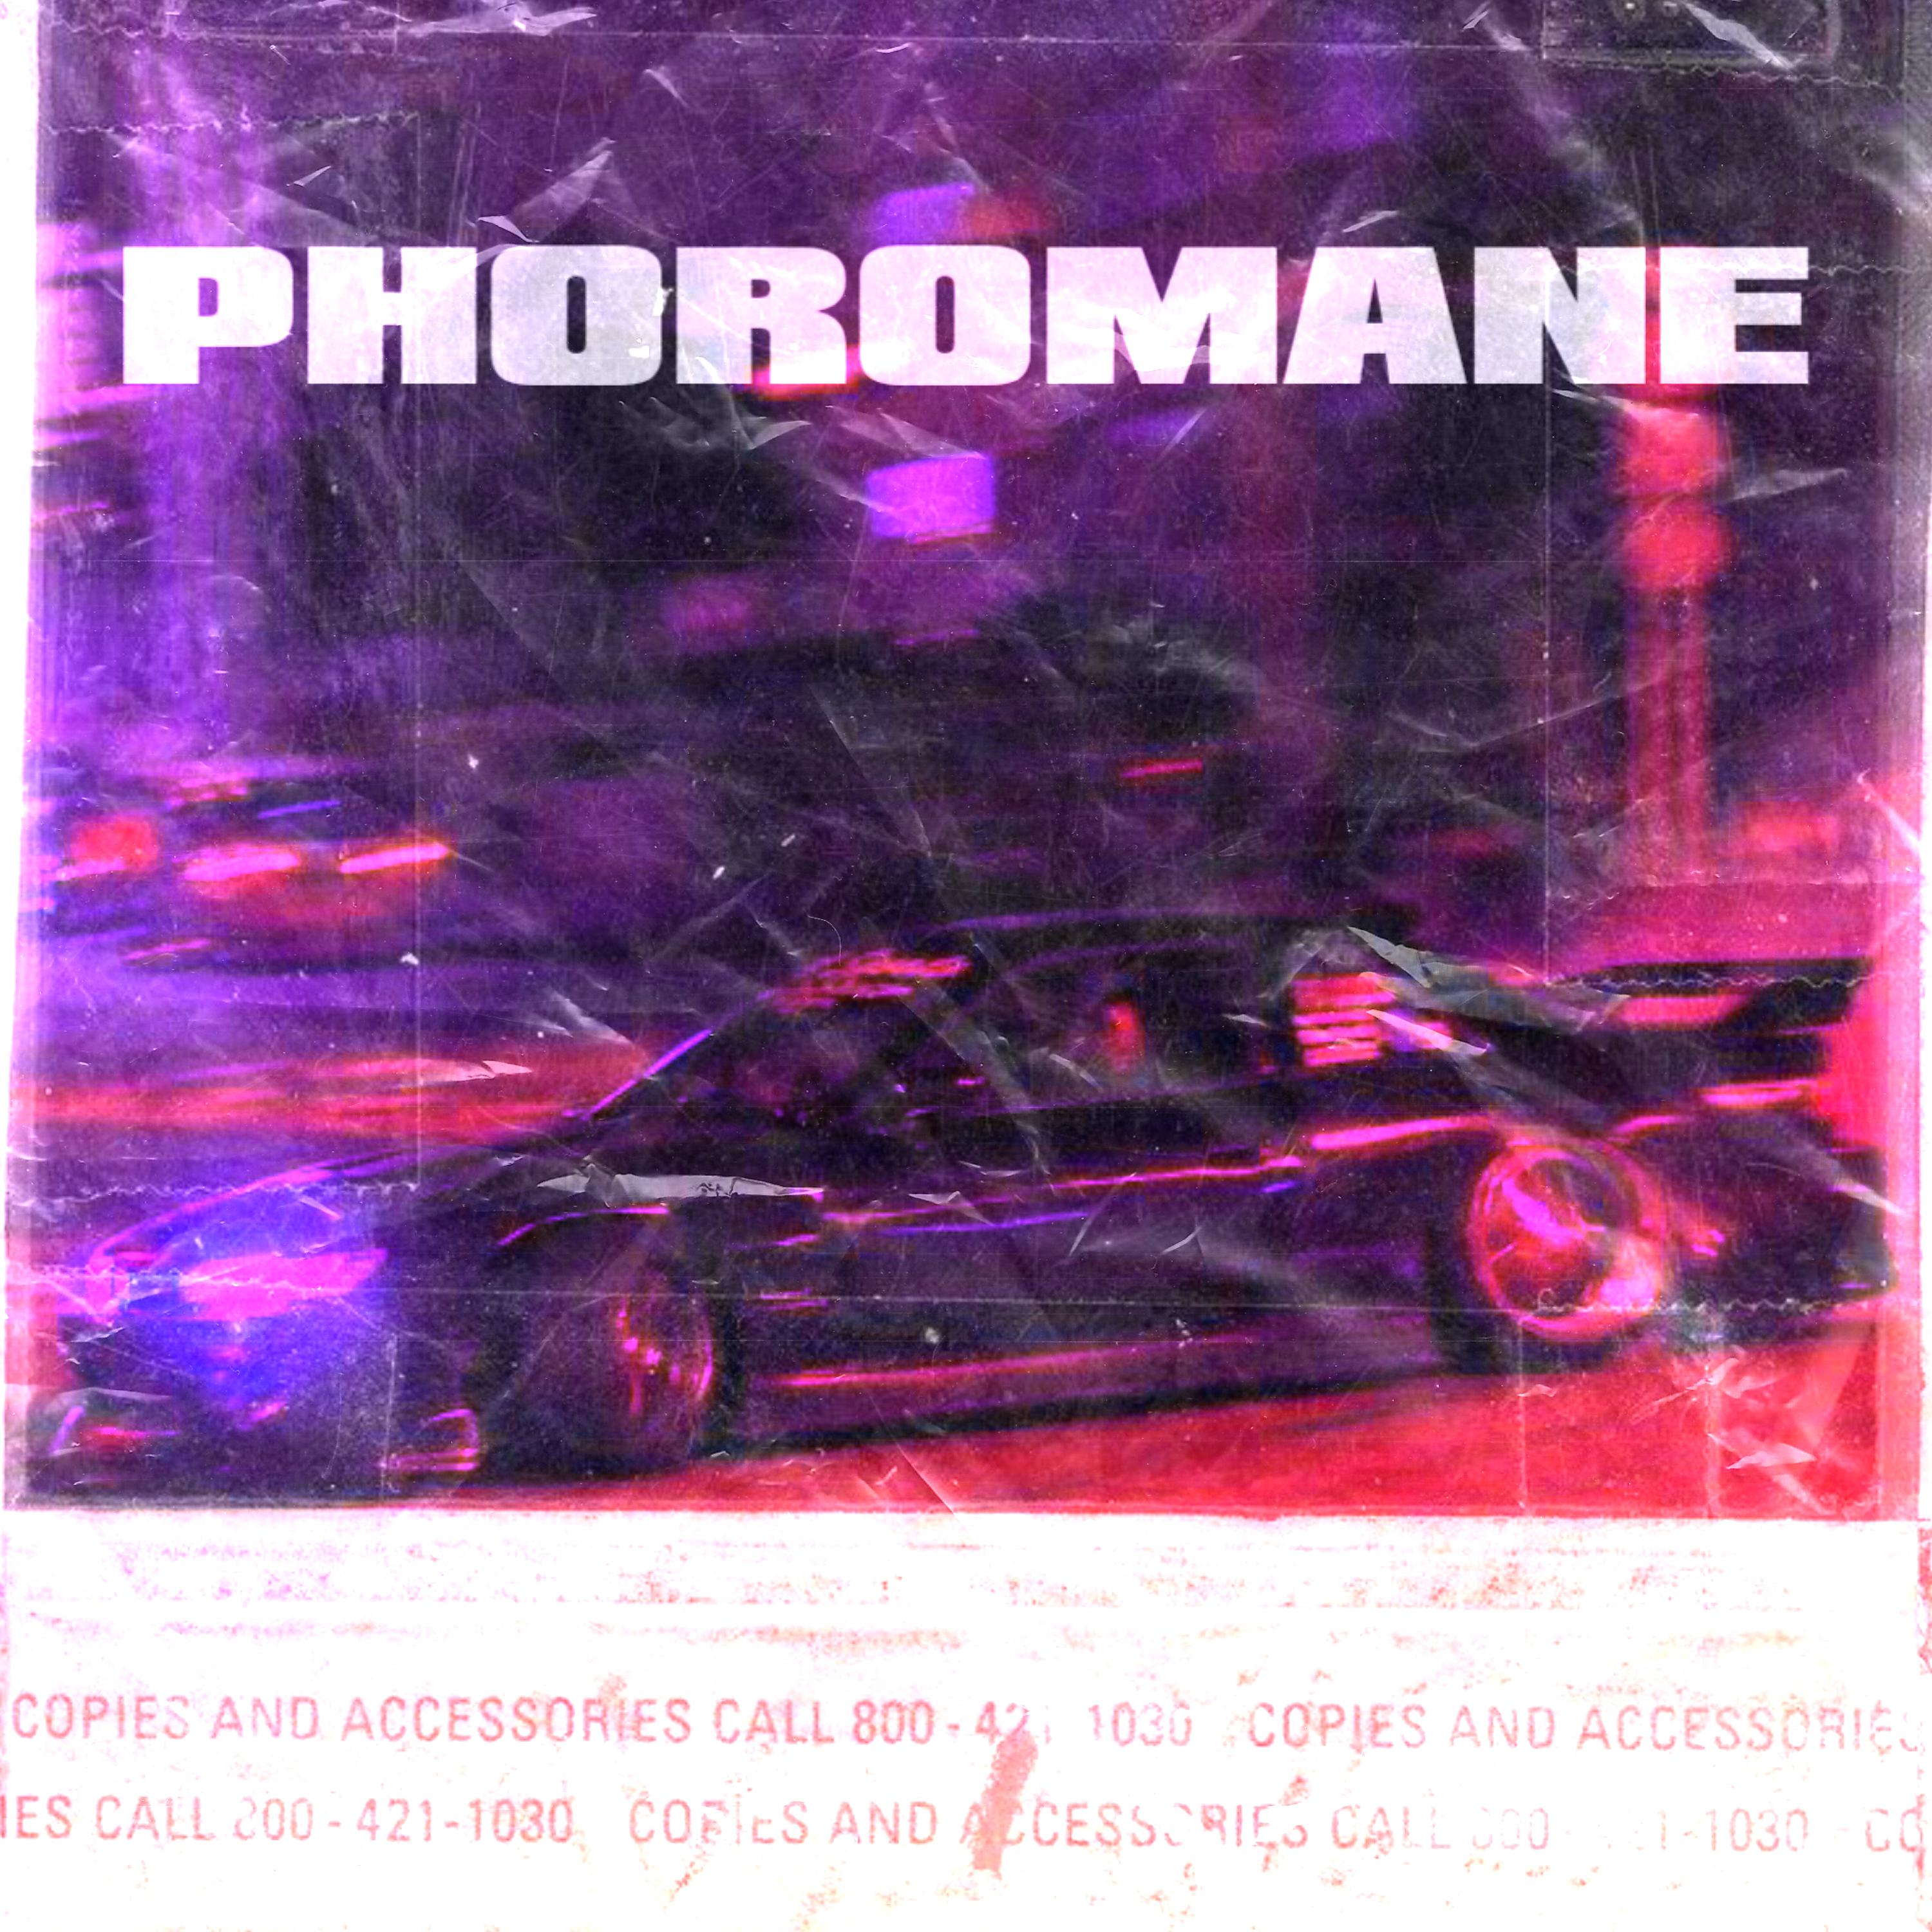 Постер альбома PHONK DRIFT